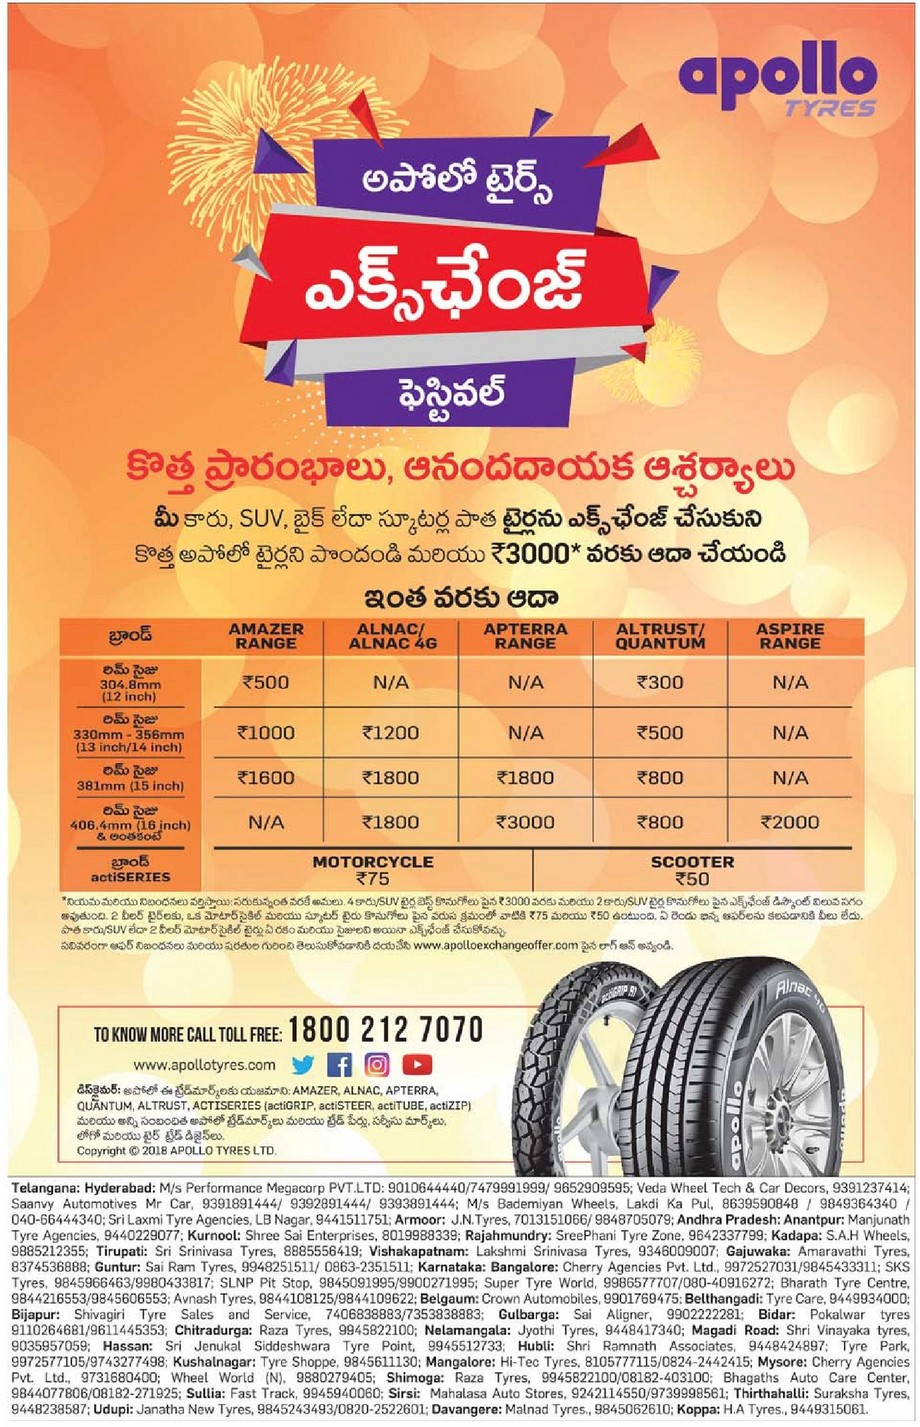 apollo-tyres-exchange-festival-kotha-prarambhalu-ad-eenadu-telangana-07-12-2018.jpeg